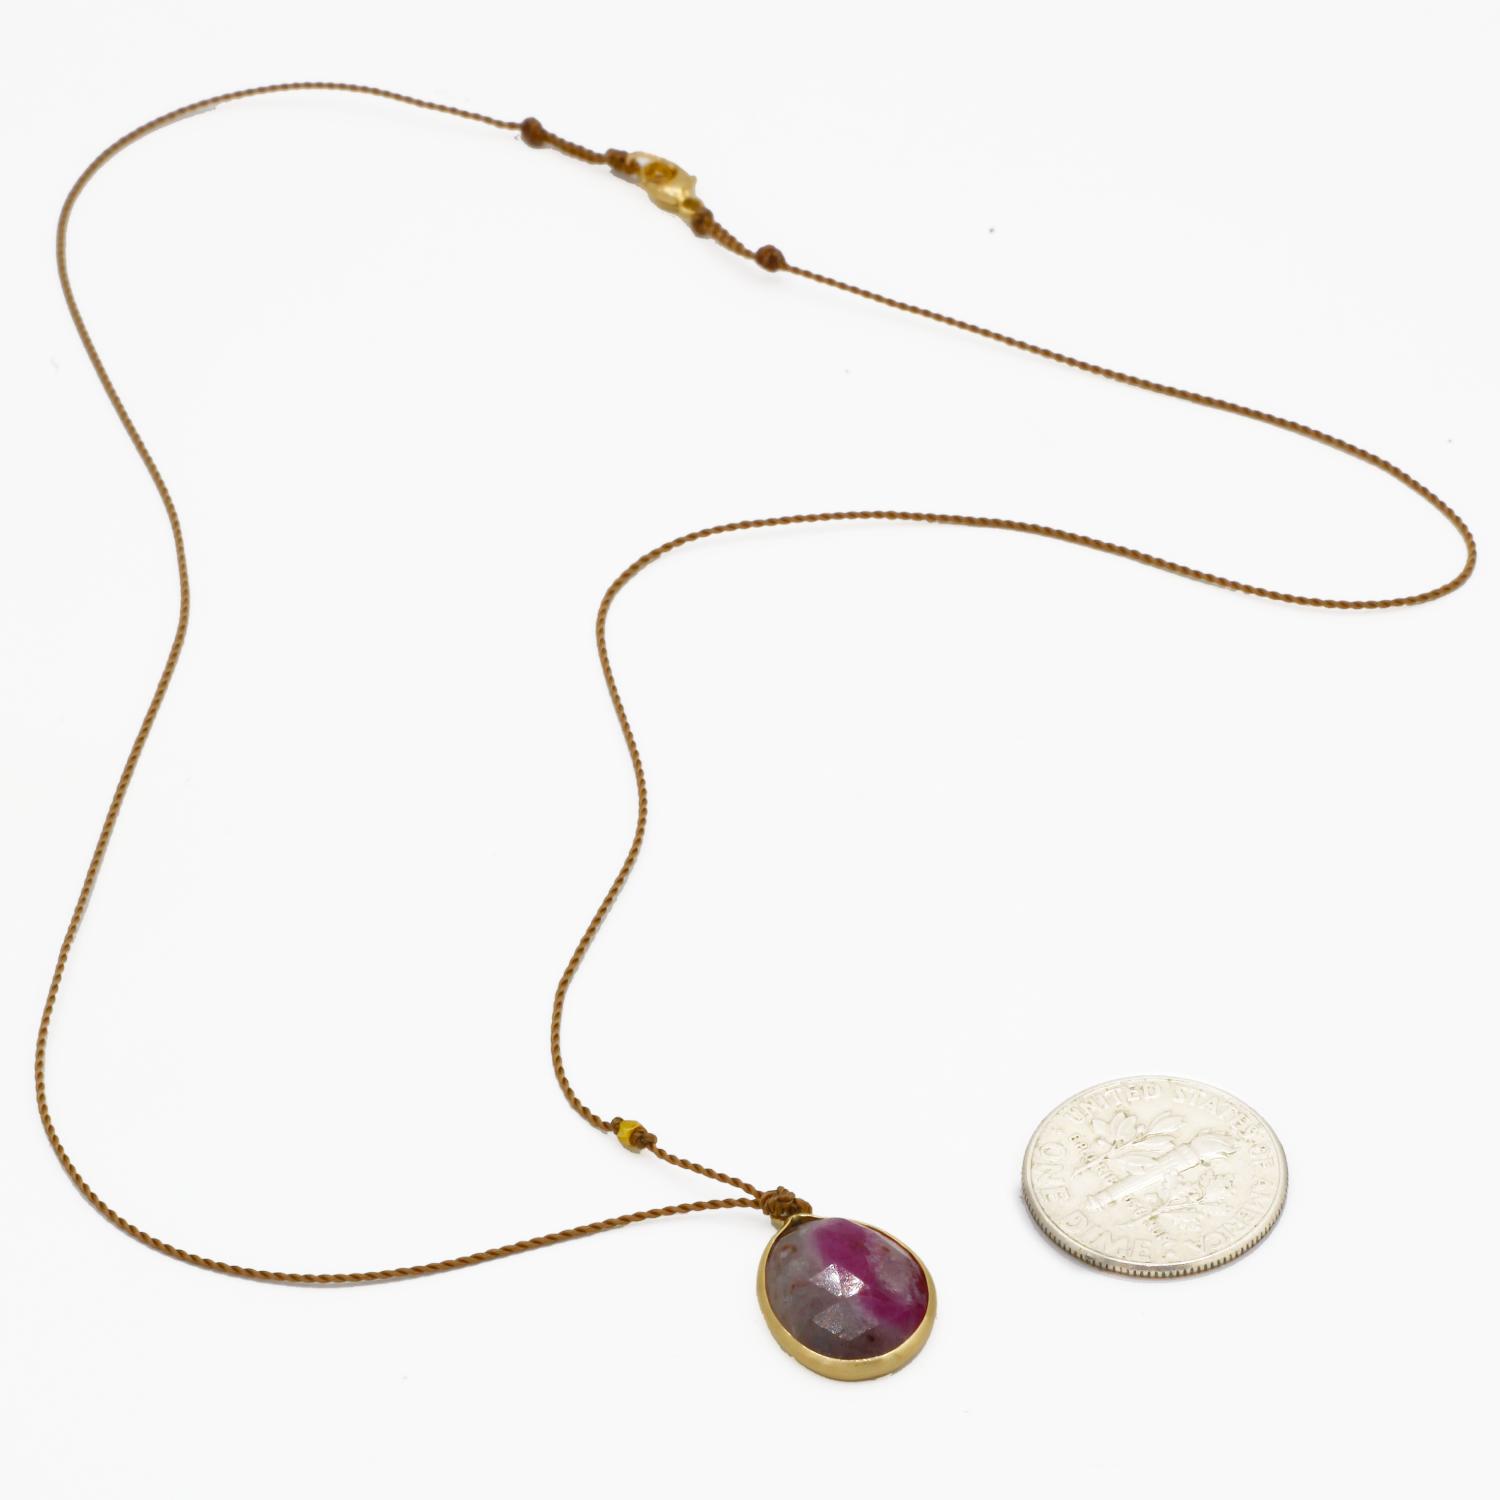 Margaret Solow Jewelry | Opaque Ruby + 14k Gold Drop Necklace | Firecracker